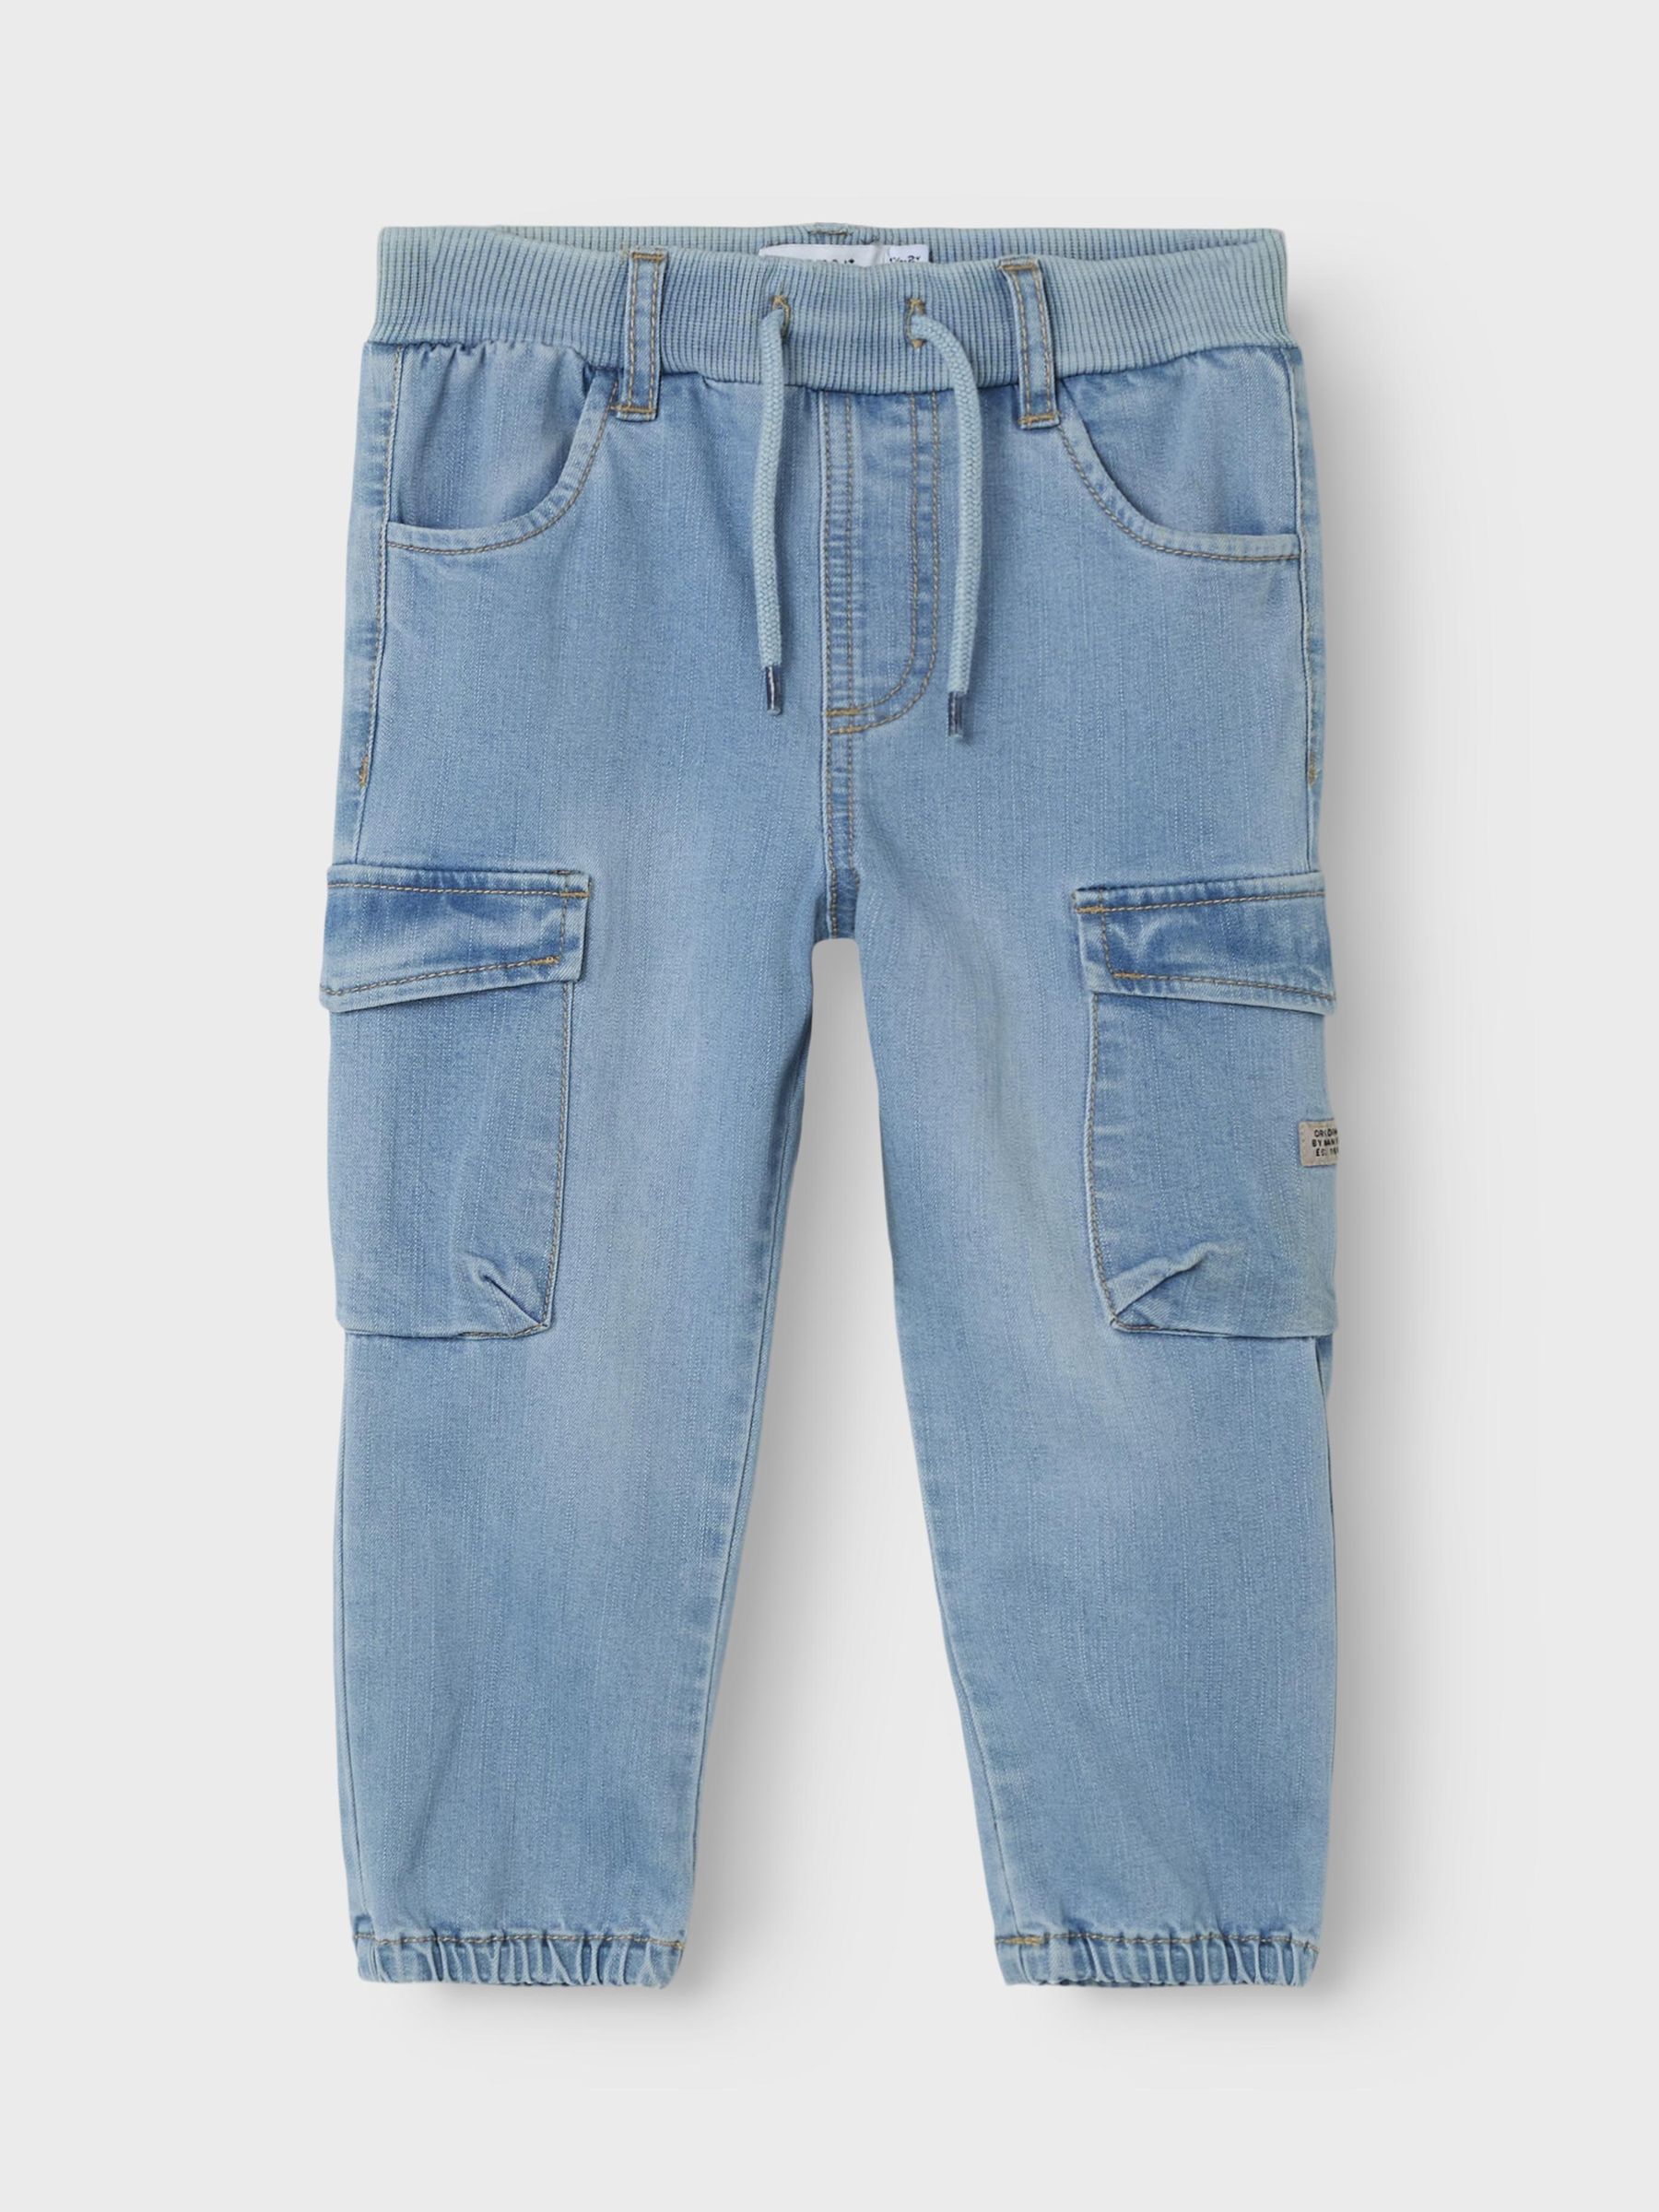 Aldevin-Budis Jeans Pants Trousers Denim European and American Torn Jeans  Long Pants Wide Leg Pants(Light Blue,XS) at Amazon Women's Jeans store